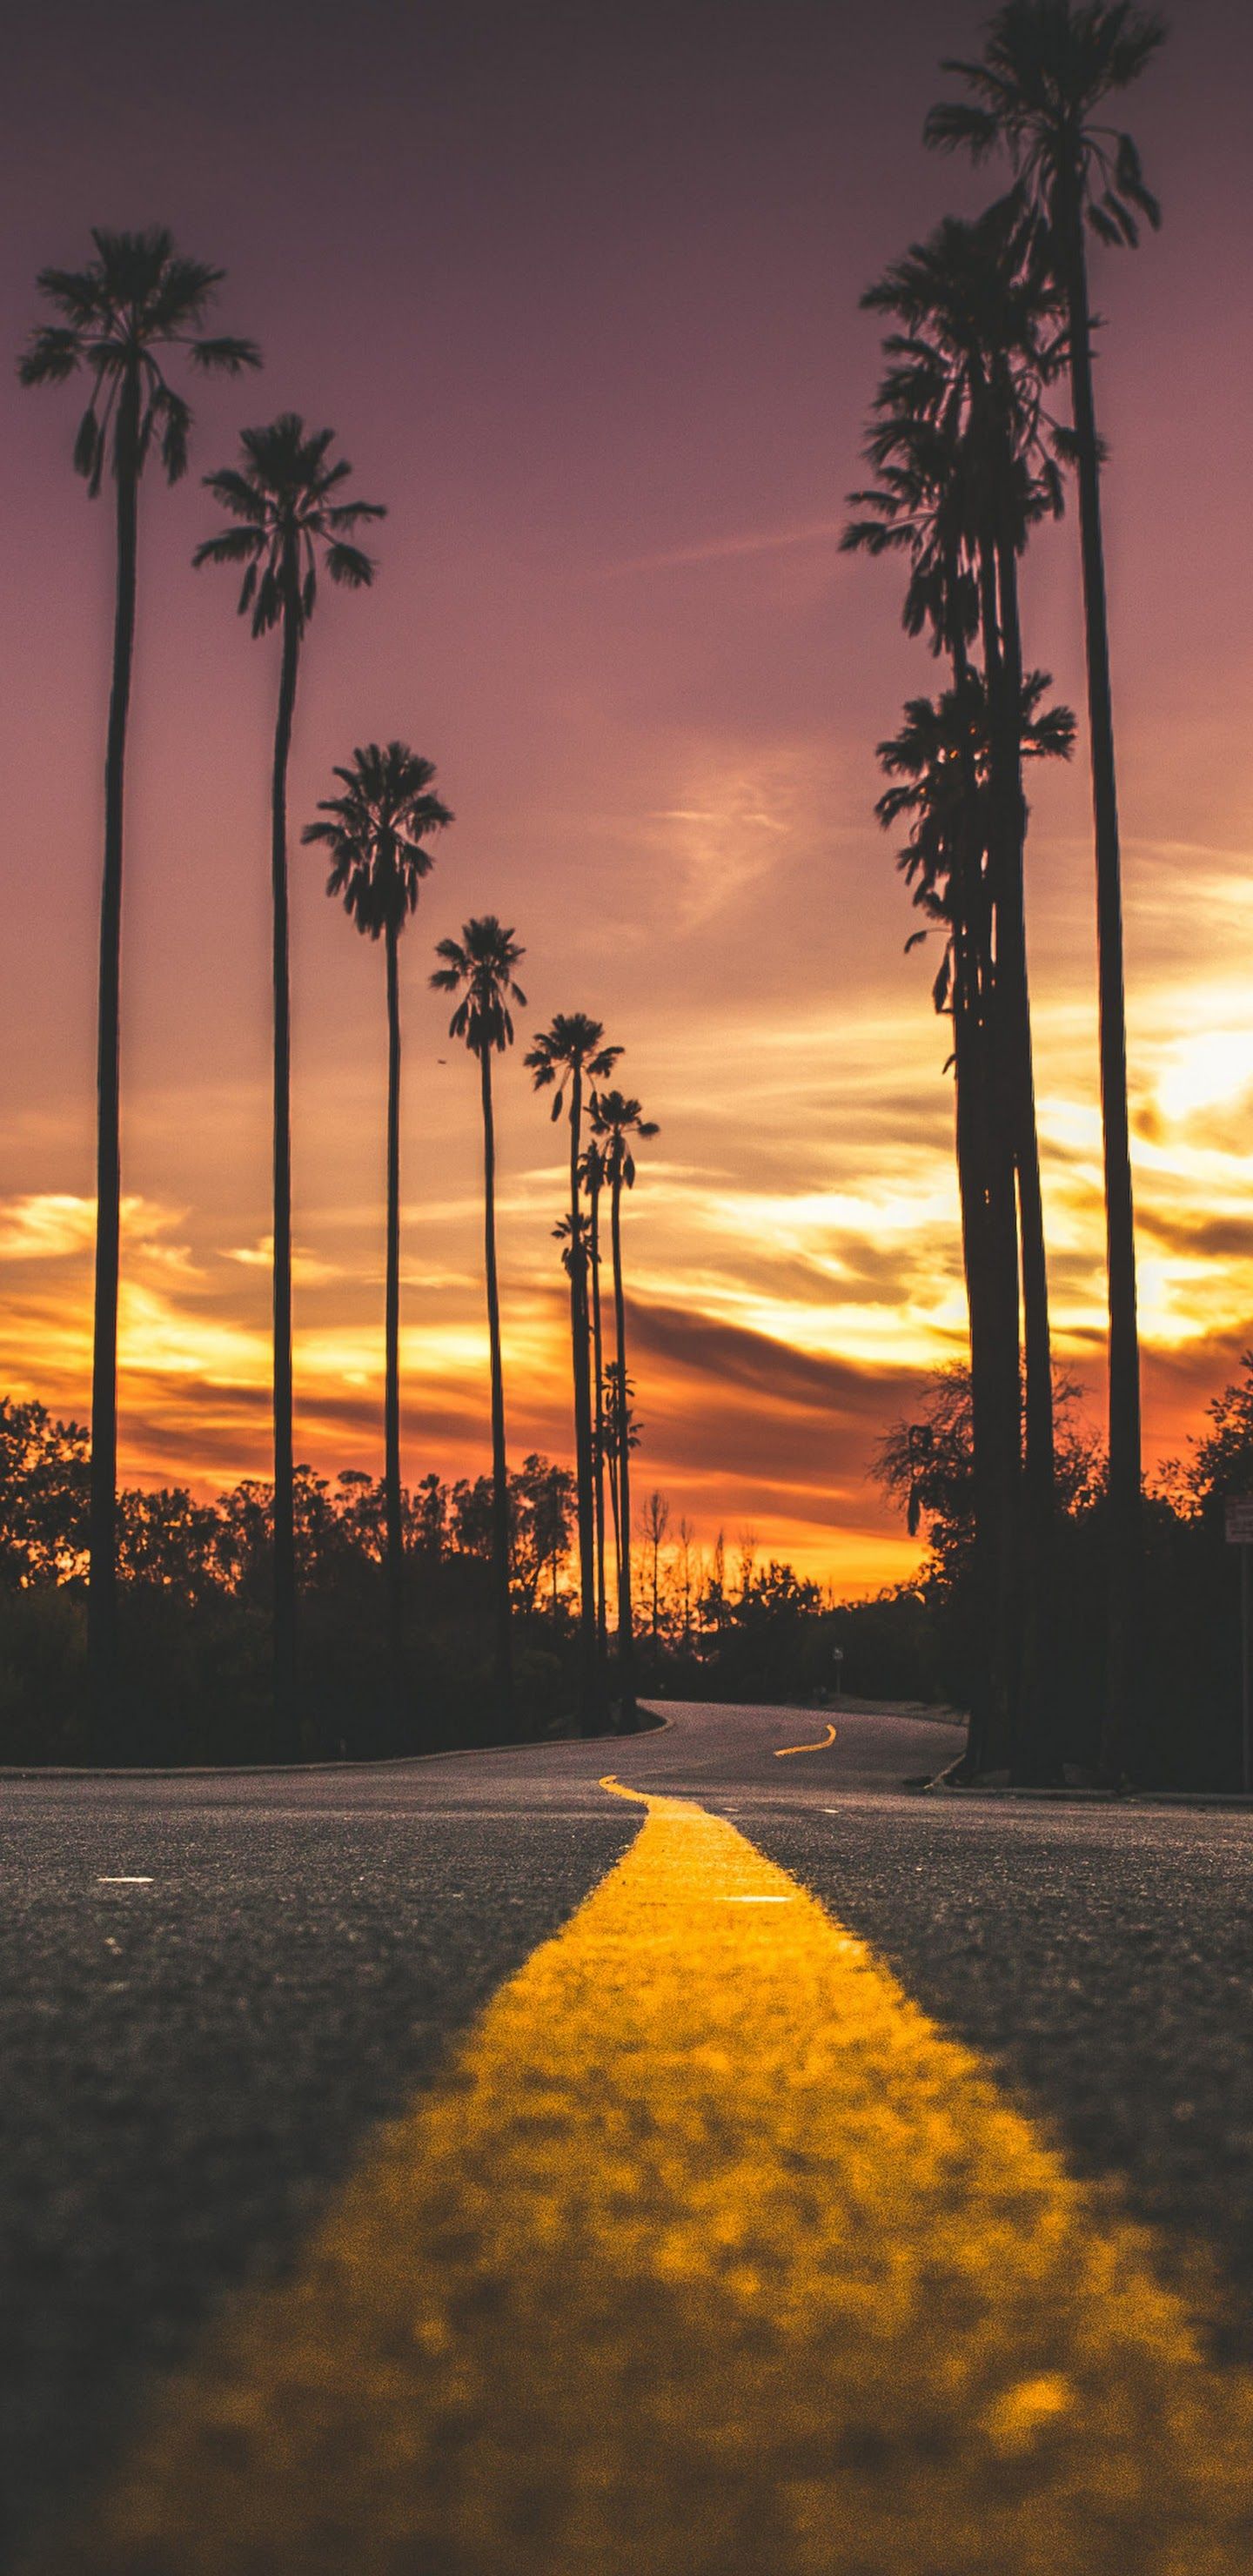 Sunset Road Landscape Scenery 4K Wallpaper